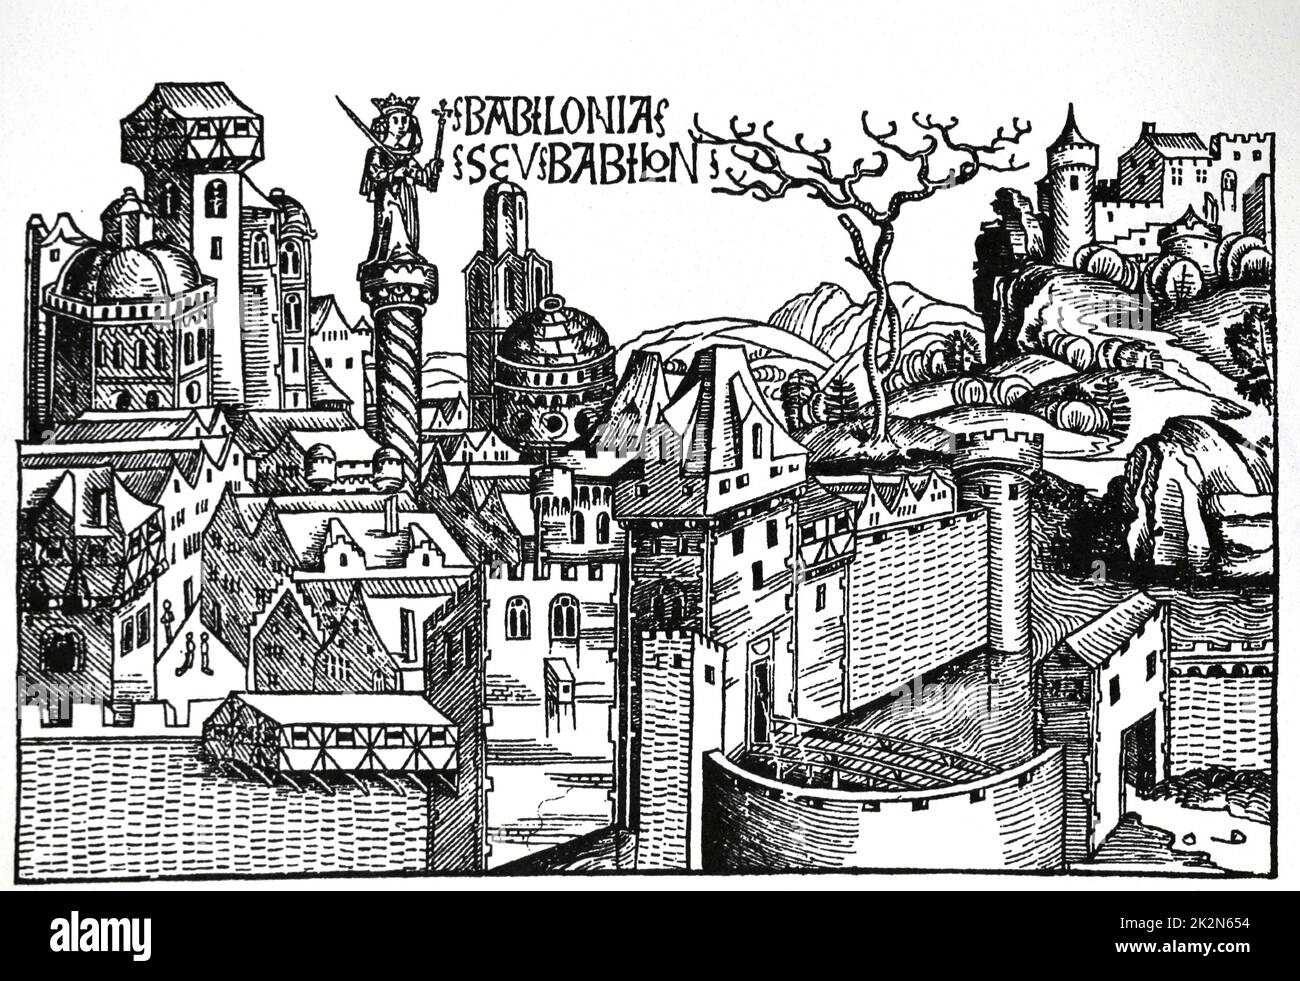 Mesopotamia. Babylon city. The Nuremberg Chronicles. 15th century. Stock Photo